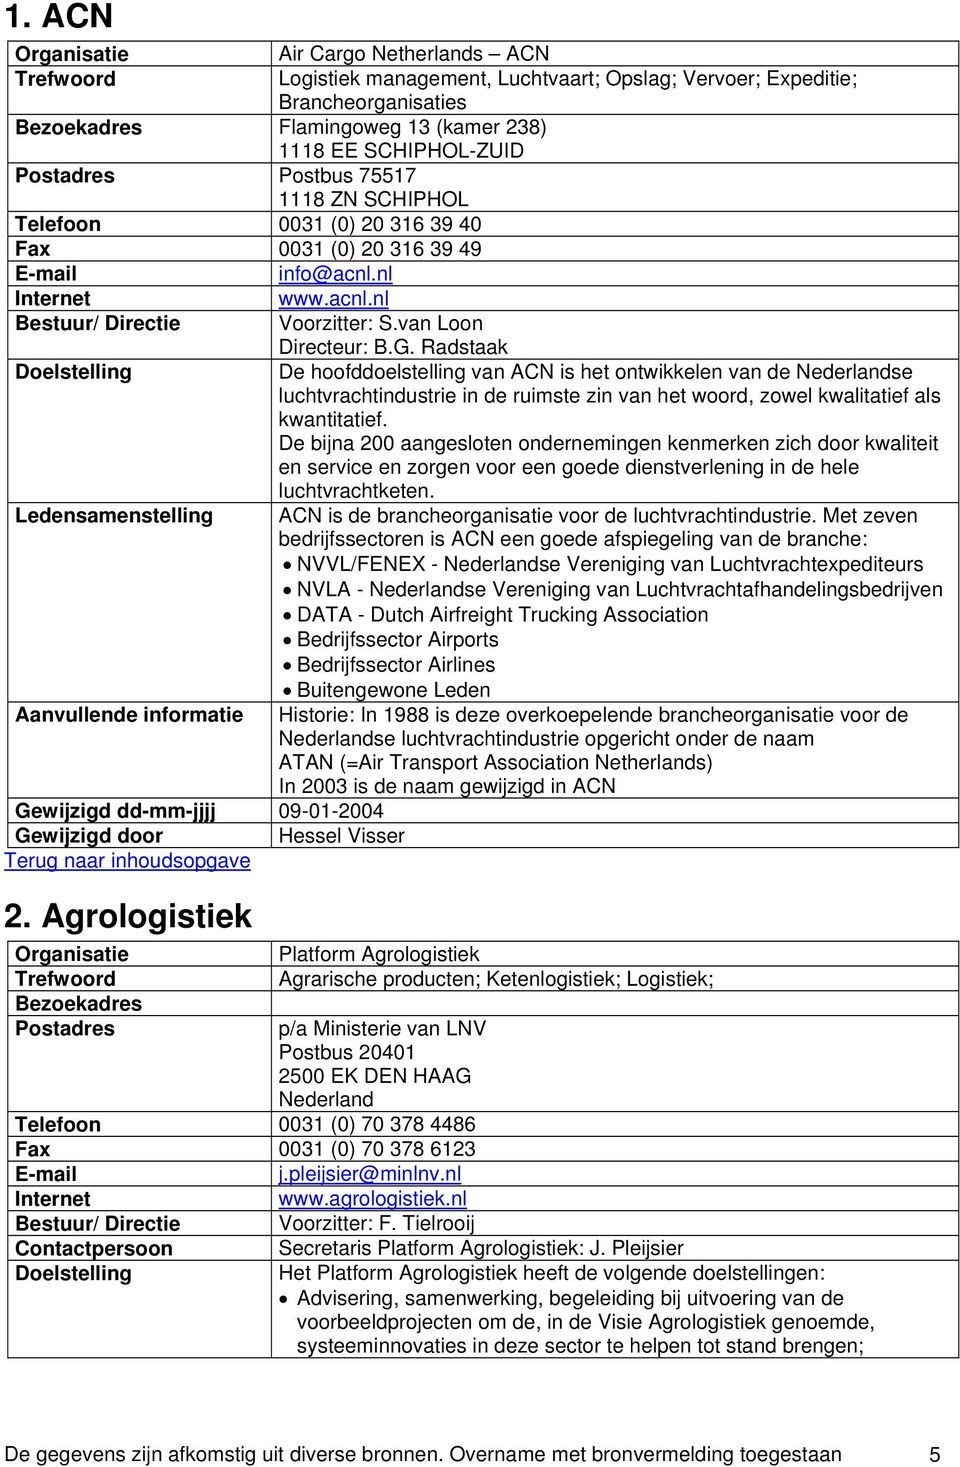 Agrologistiek Bezoekadres Postadres p/a Ministerie van LNV Postbus 20401 2500 EK DEN HAAG 